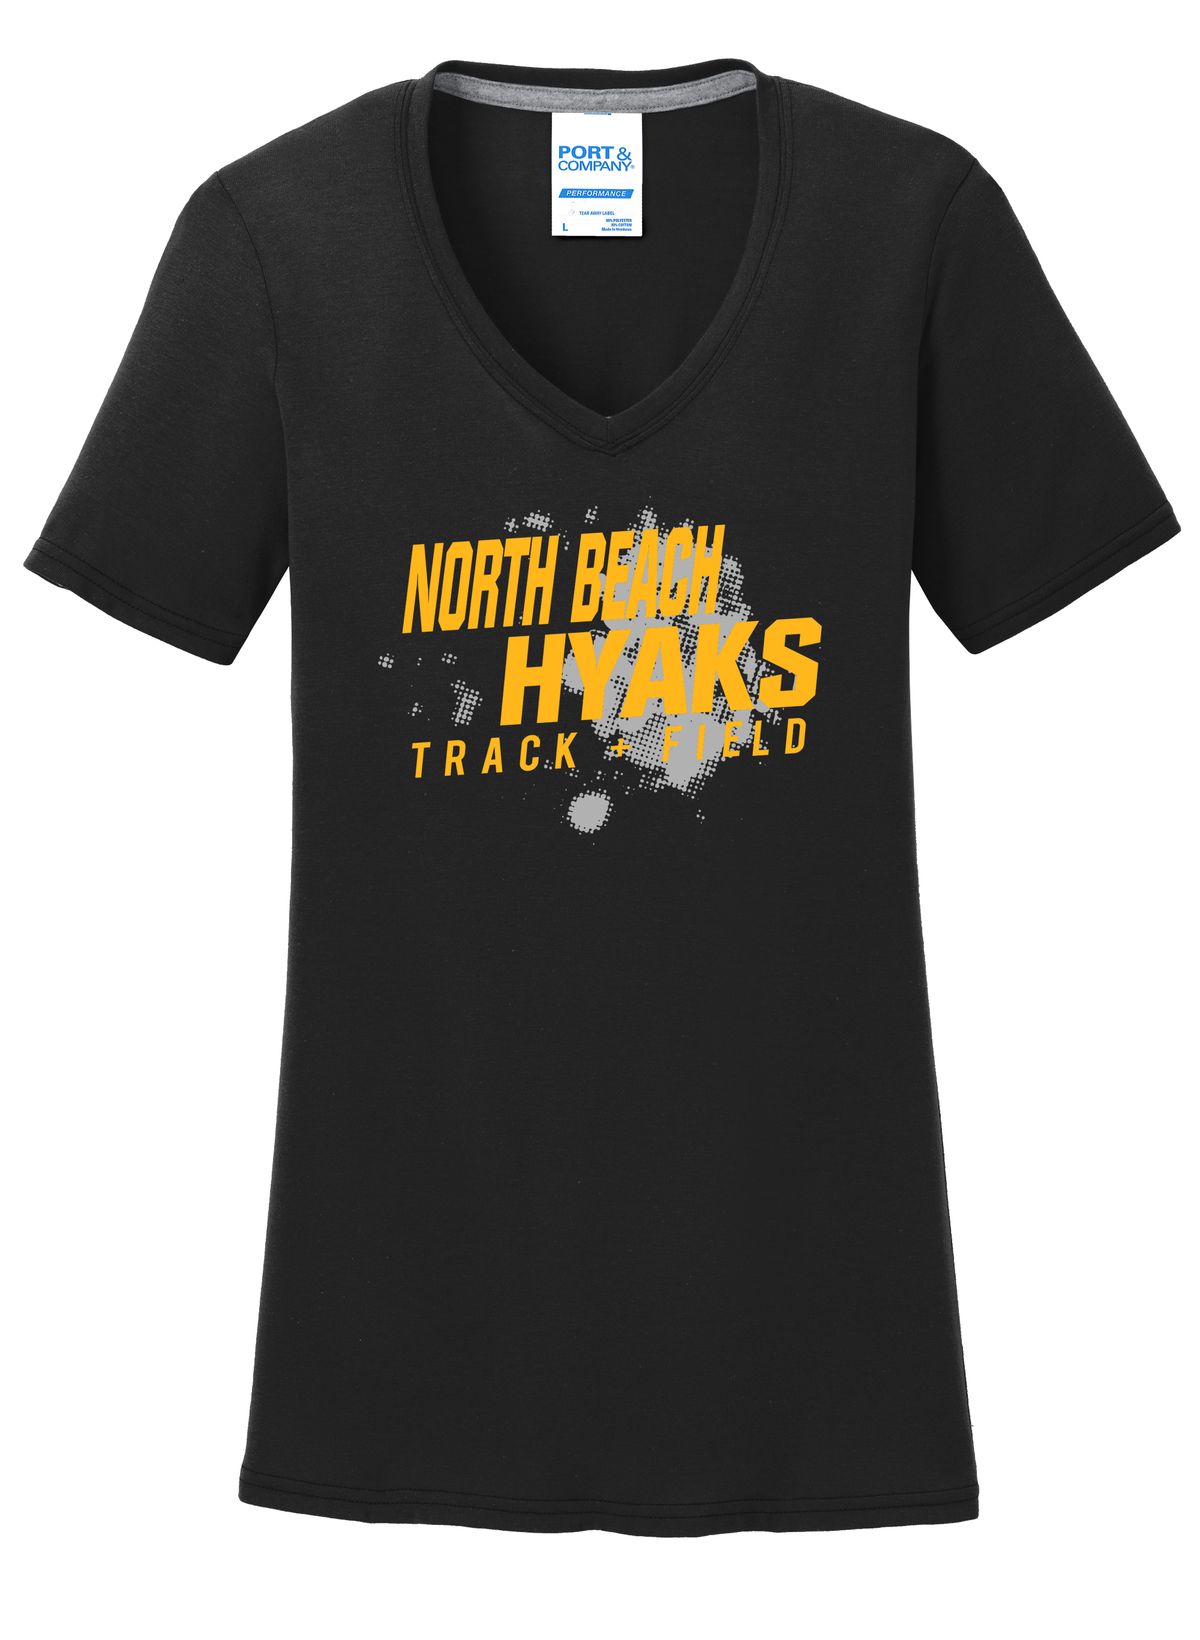 North Beach Track & Field Women's T-Shirt